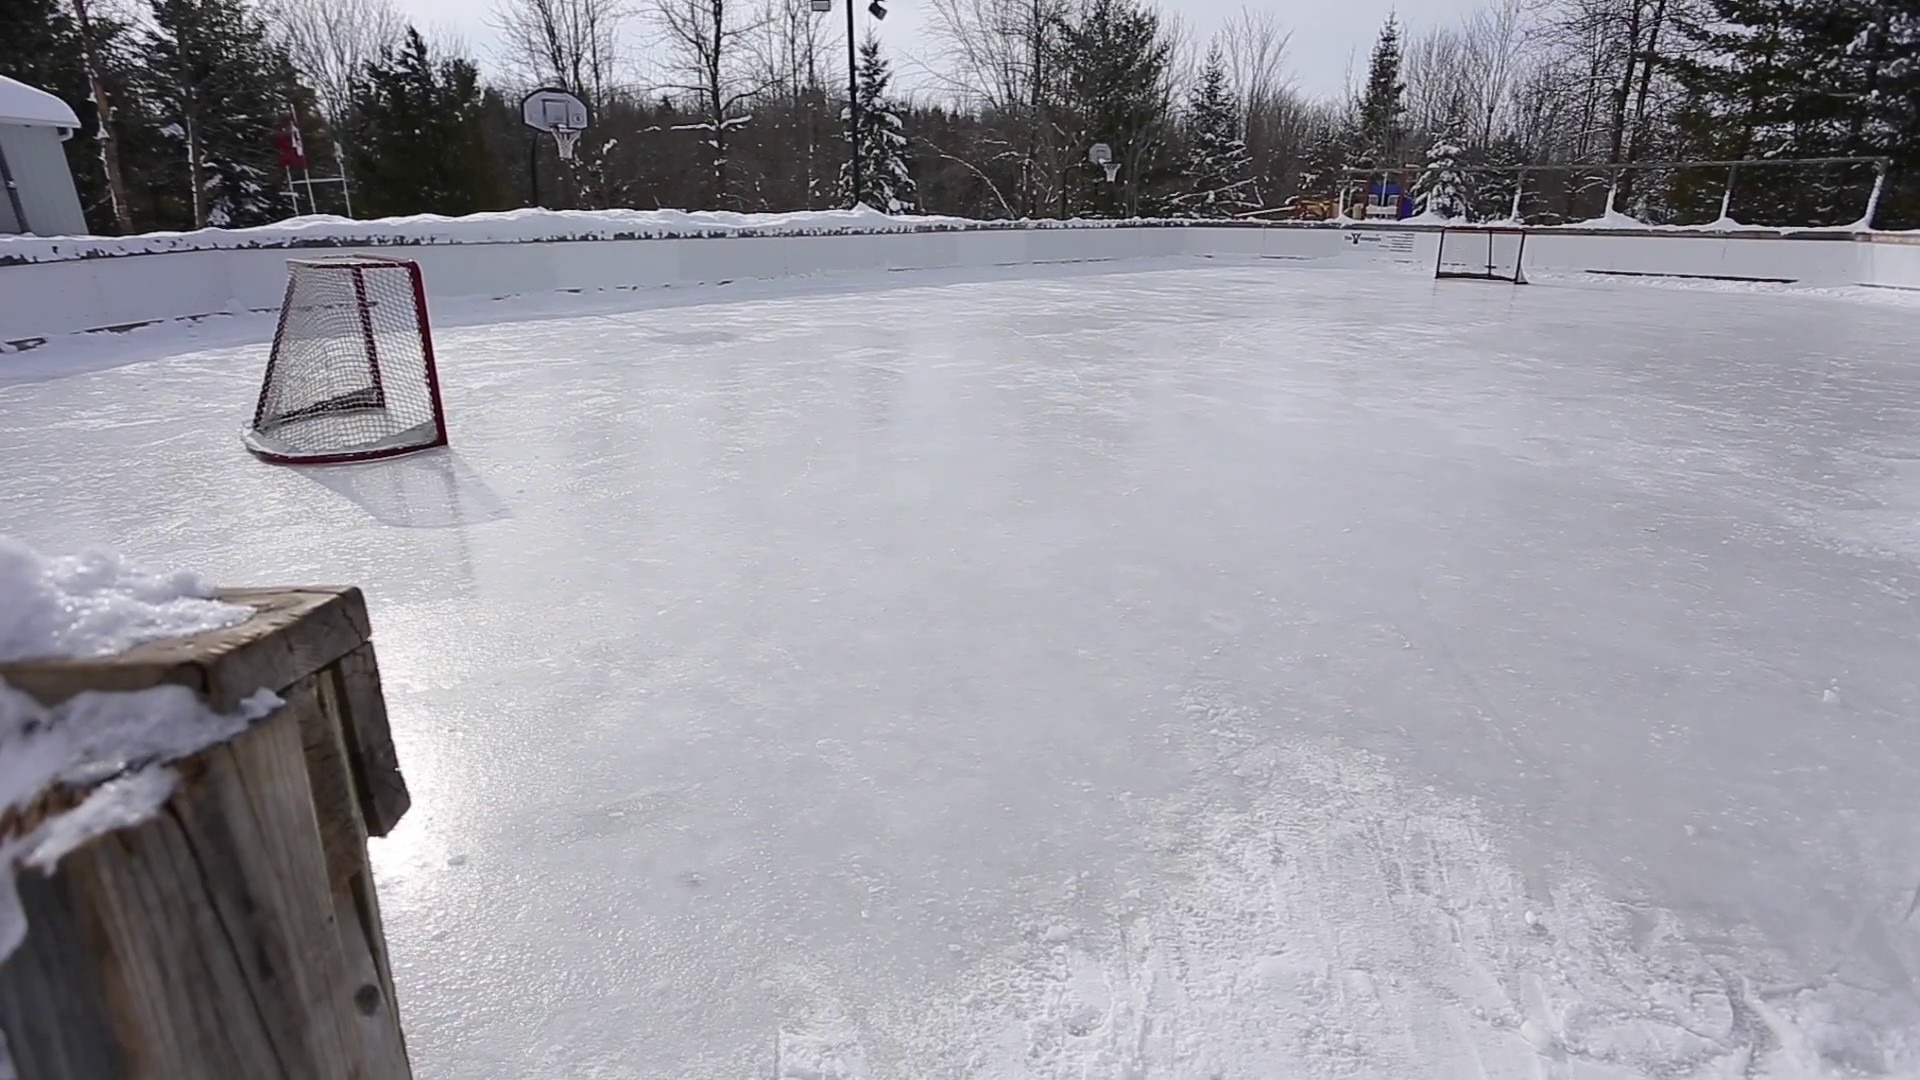 1920x1080 outdoor hockey rink with snowy forest background upward tilt reveal Stock  Video Footage - VideoBlocks